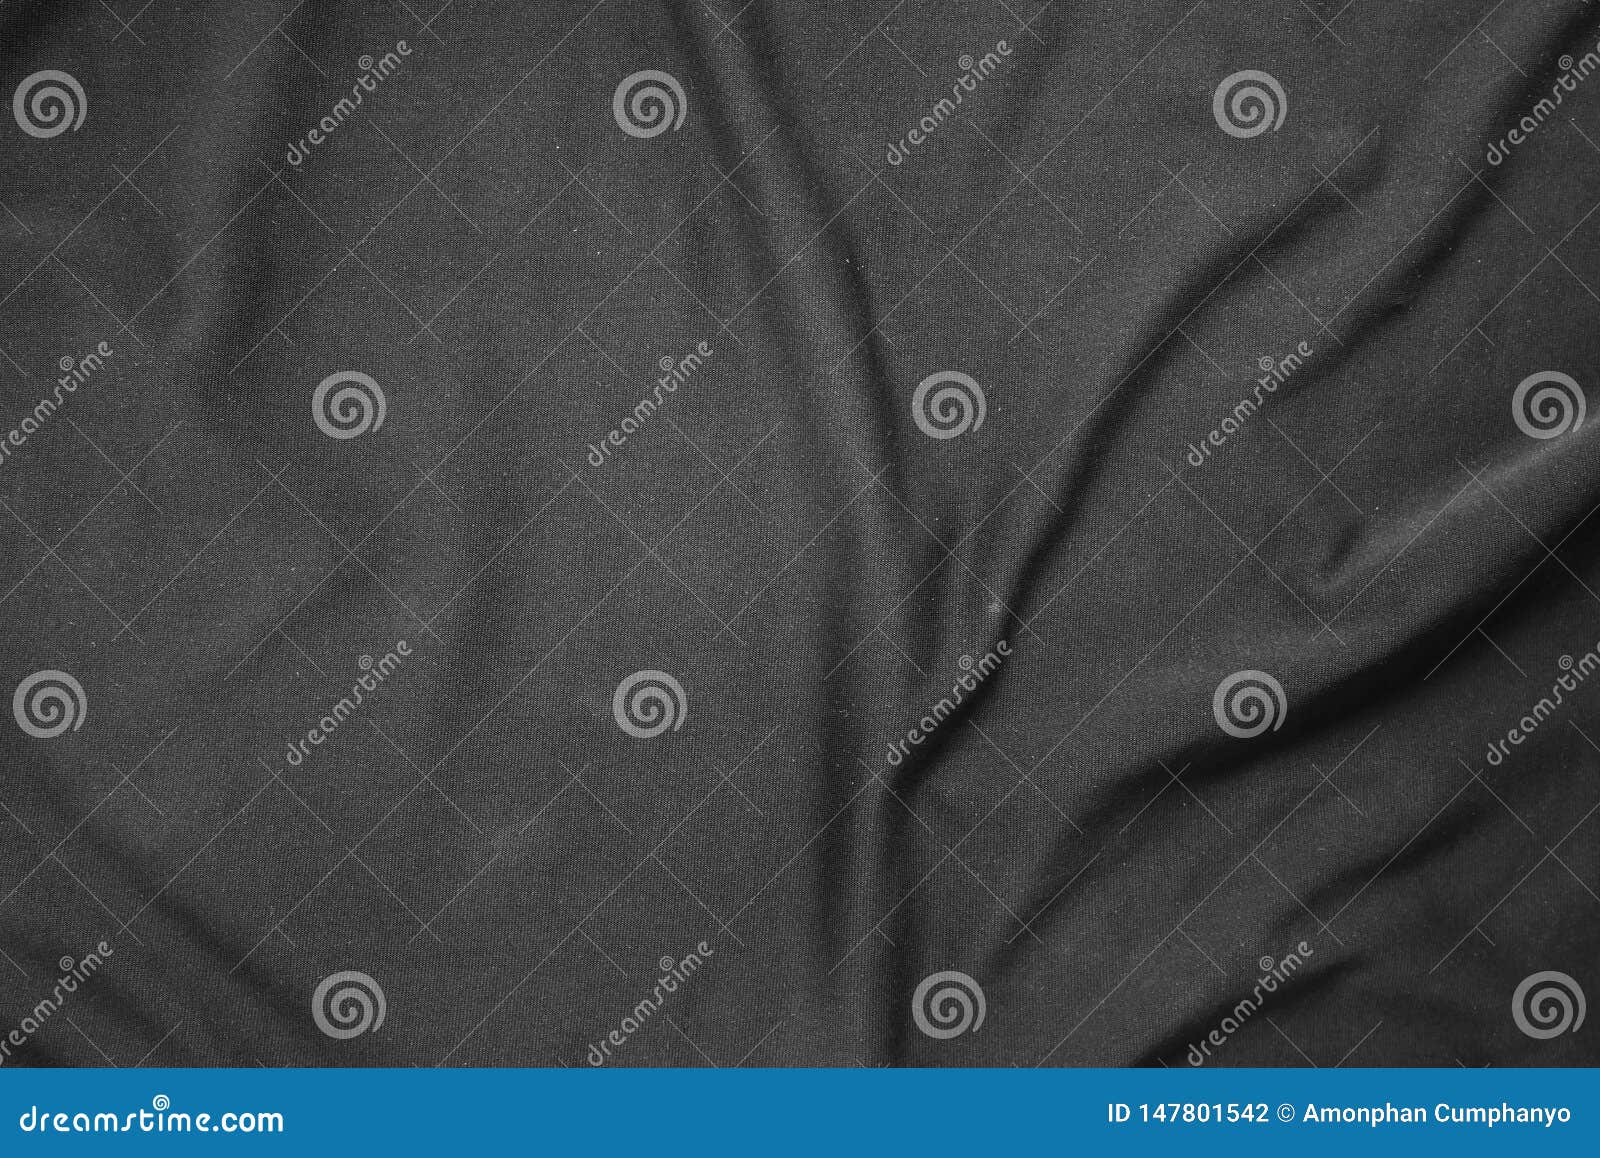 Black Silk Fabric Wall Background Stock Photo - Image of closeup, blank ...